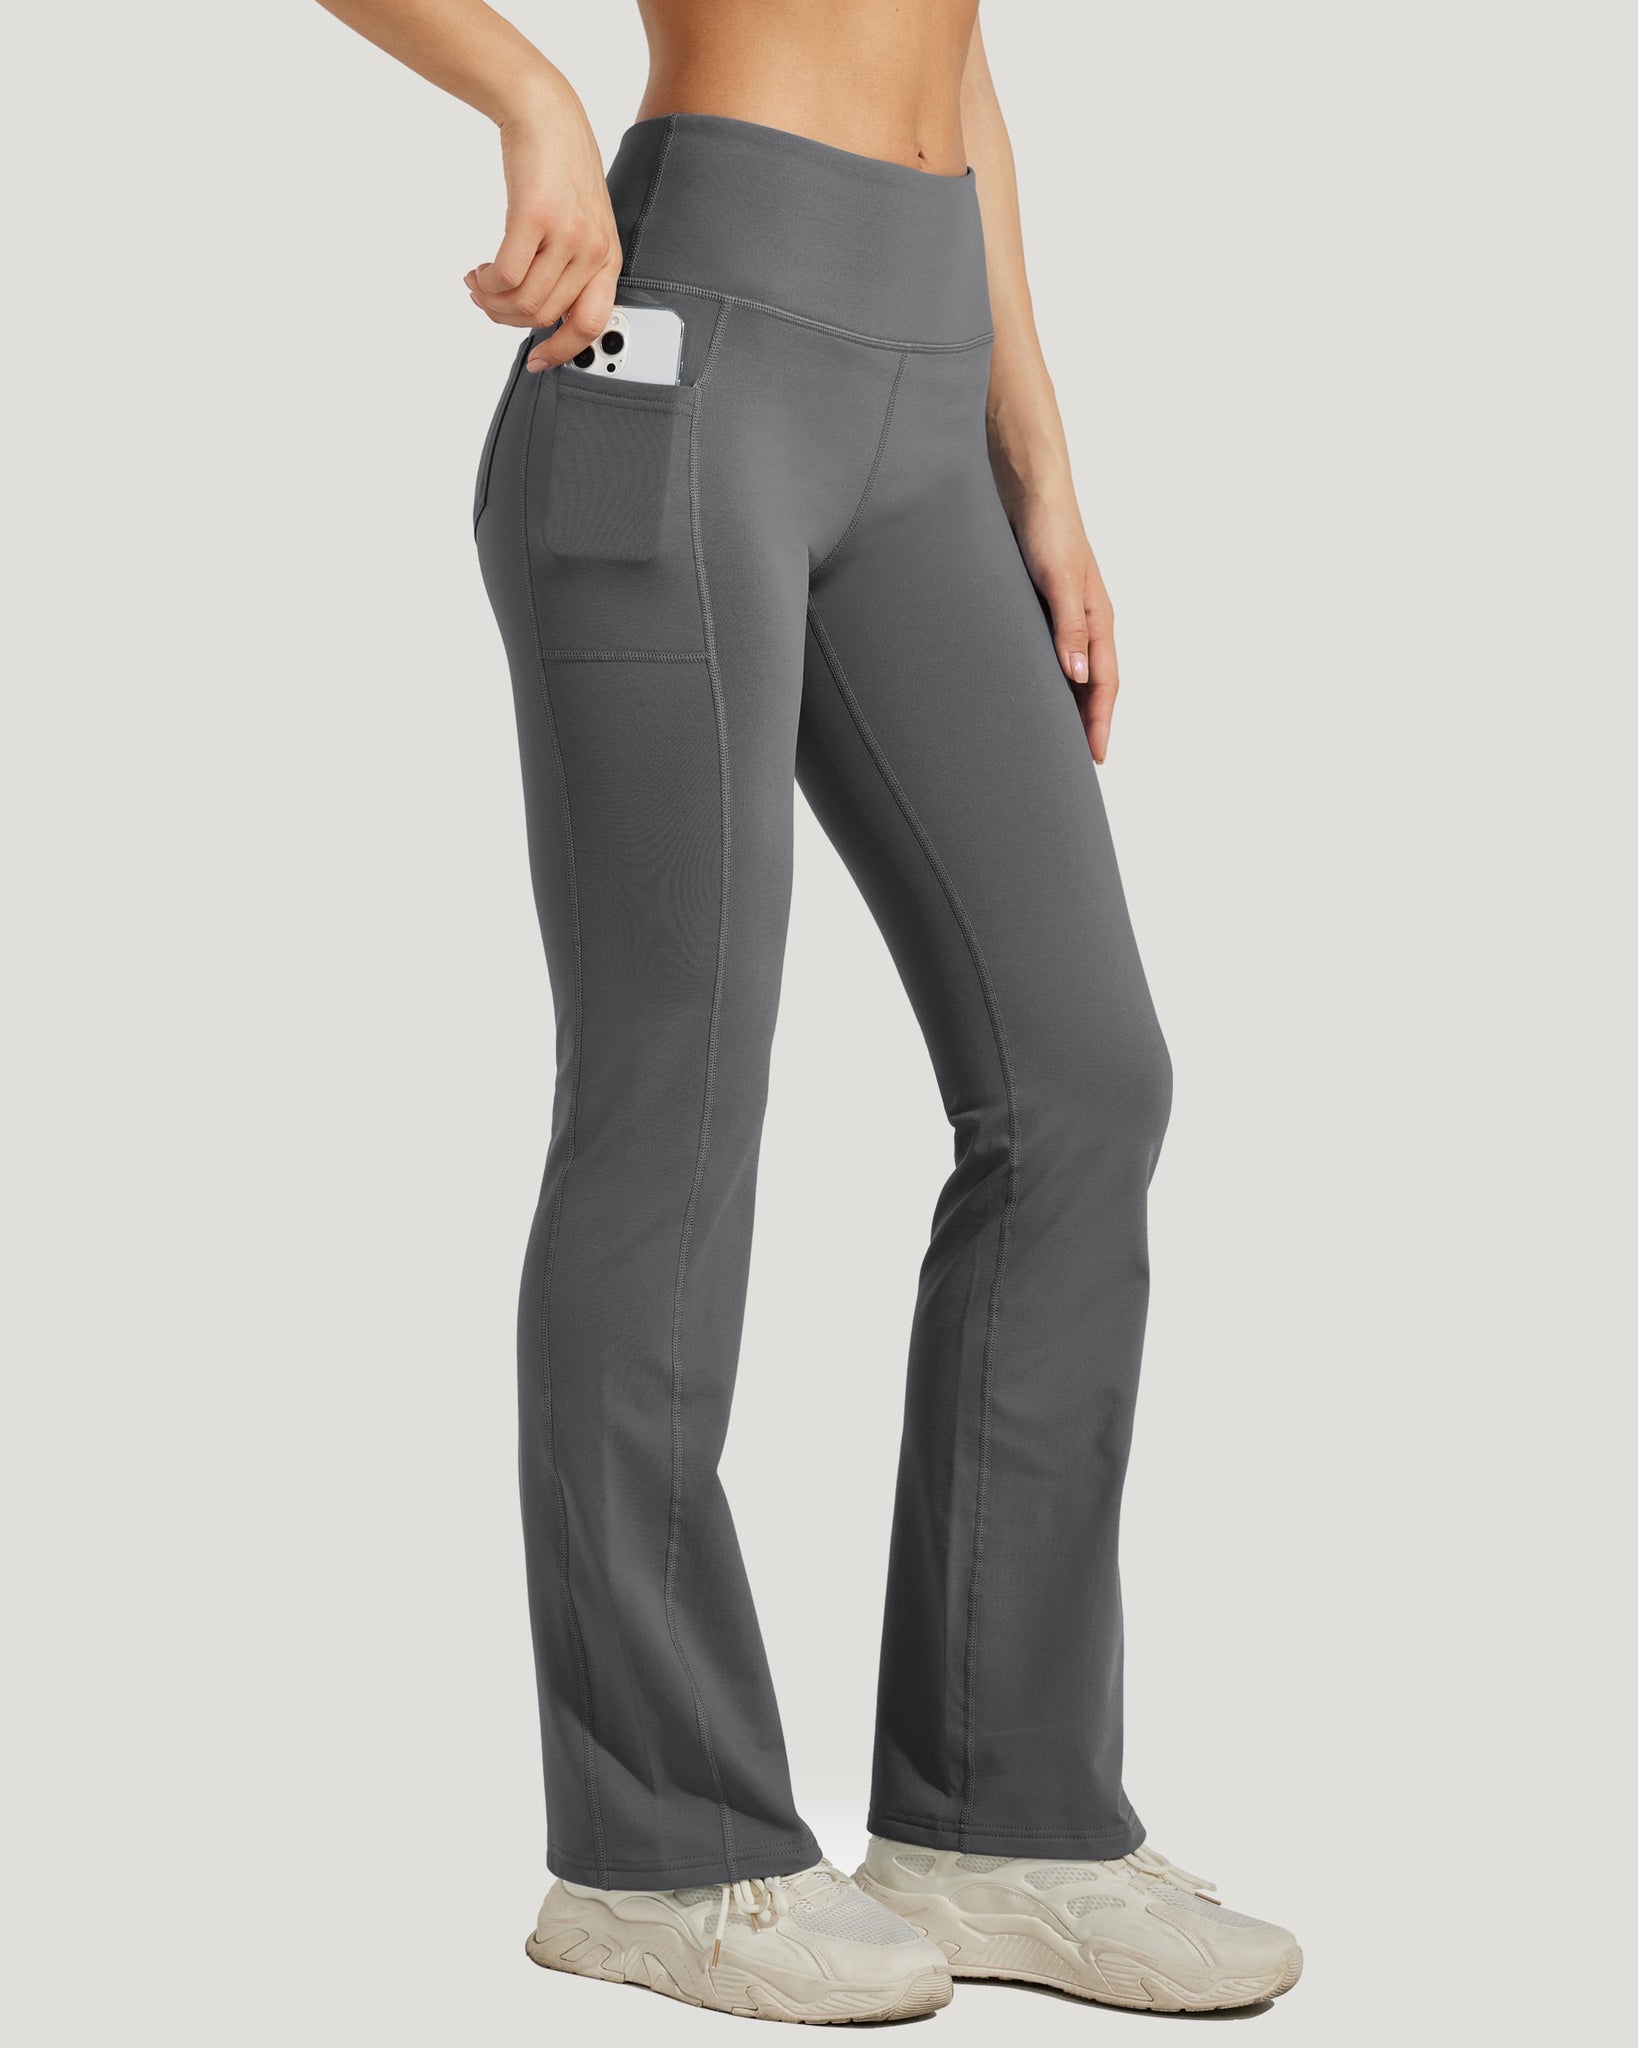 Women's Fleece Lined Bootcut Yoga Pants_Gray_model3